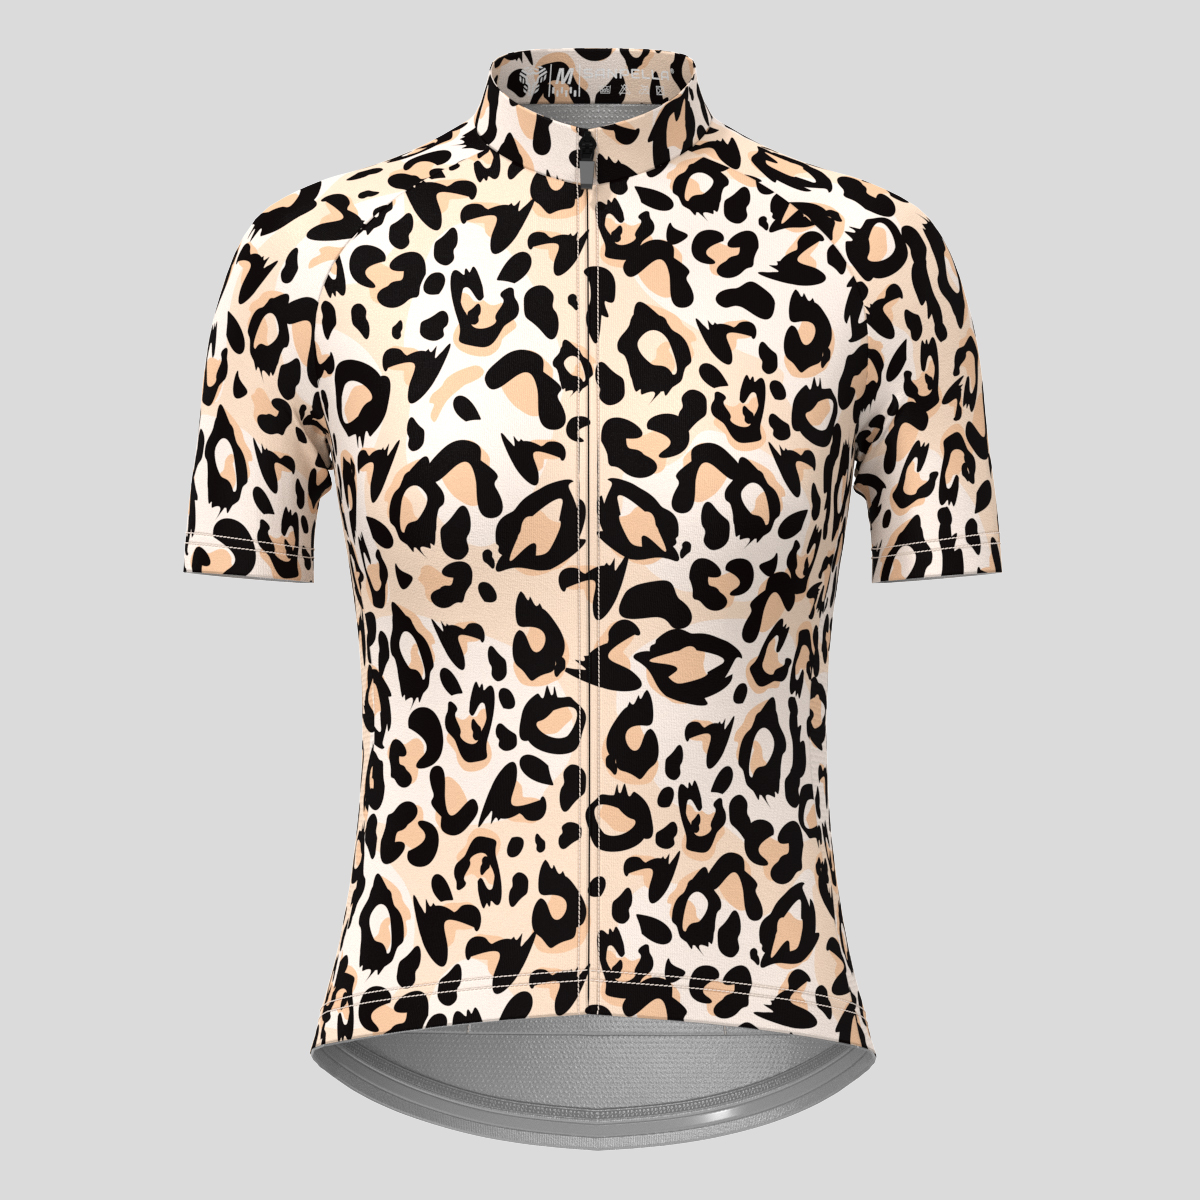 Leopard Print Women's Cycling Jersey